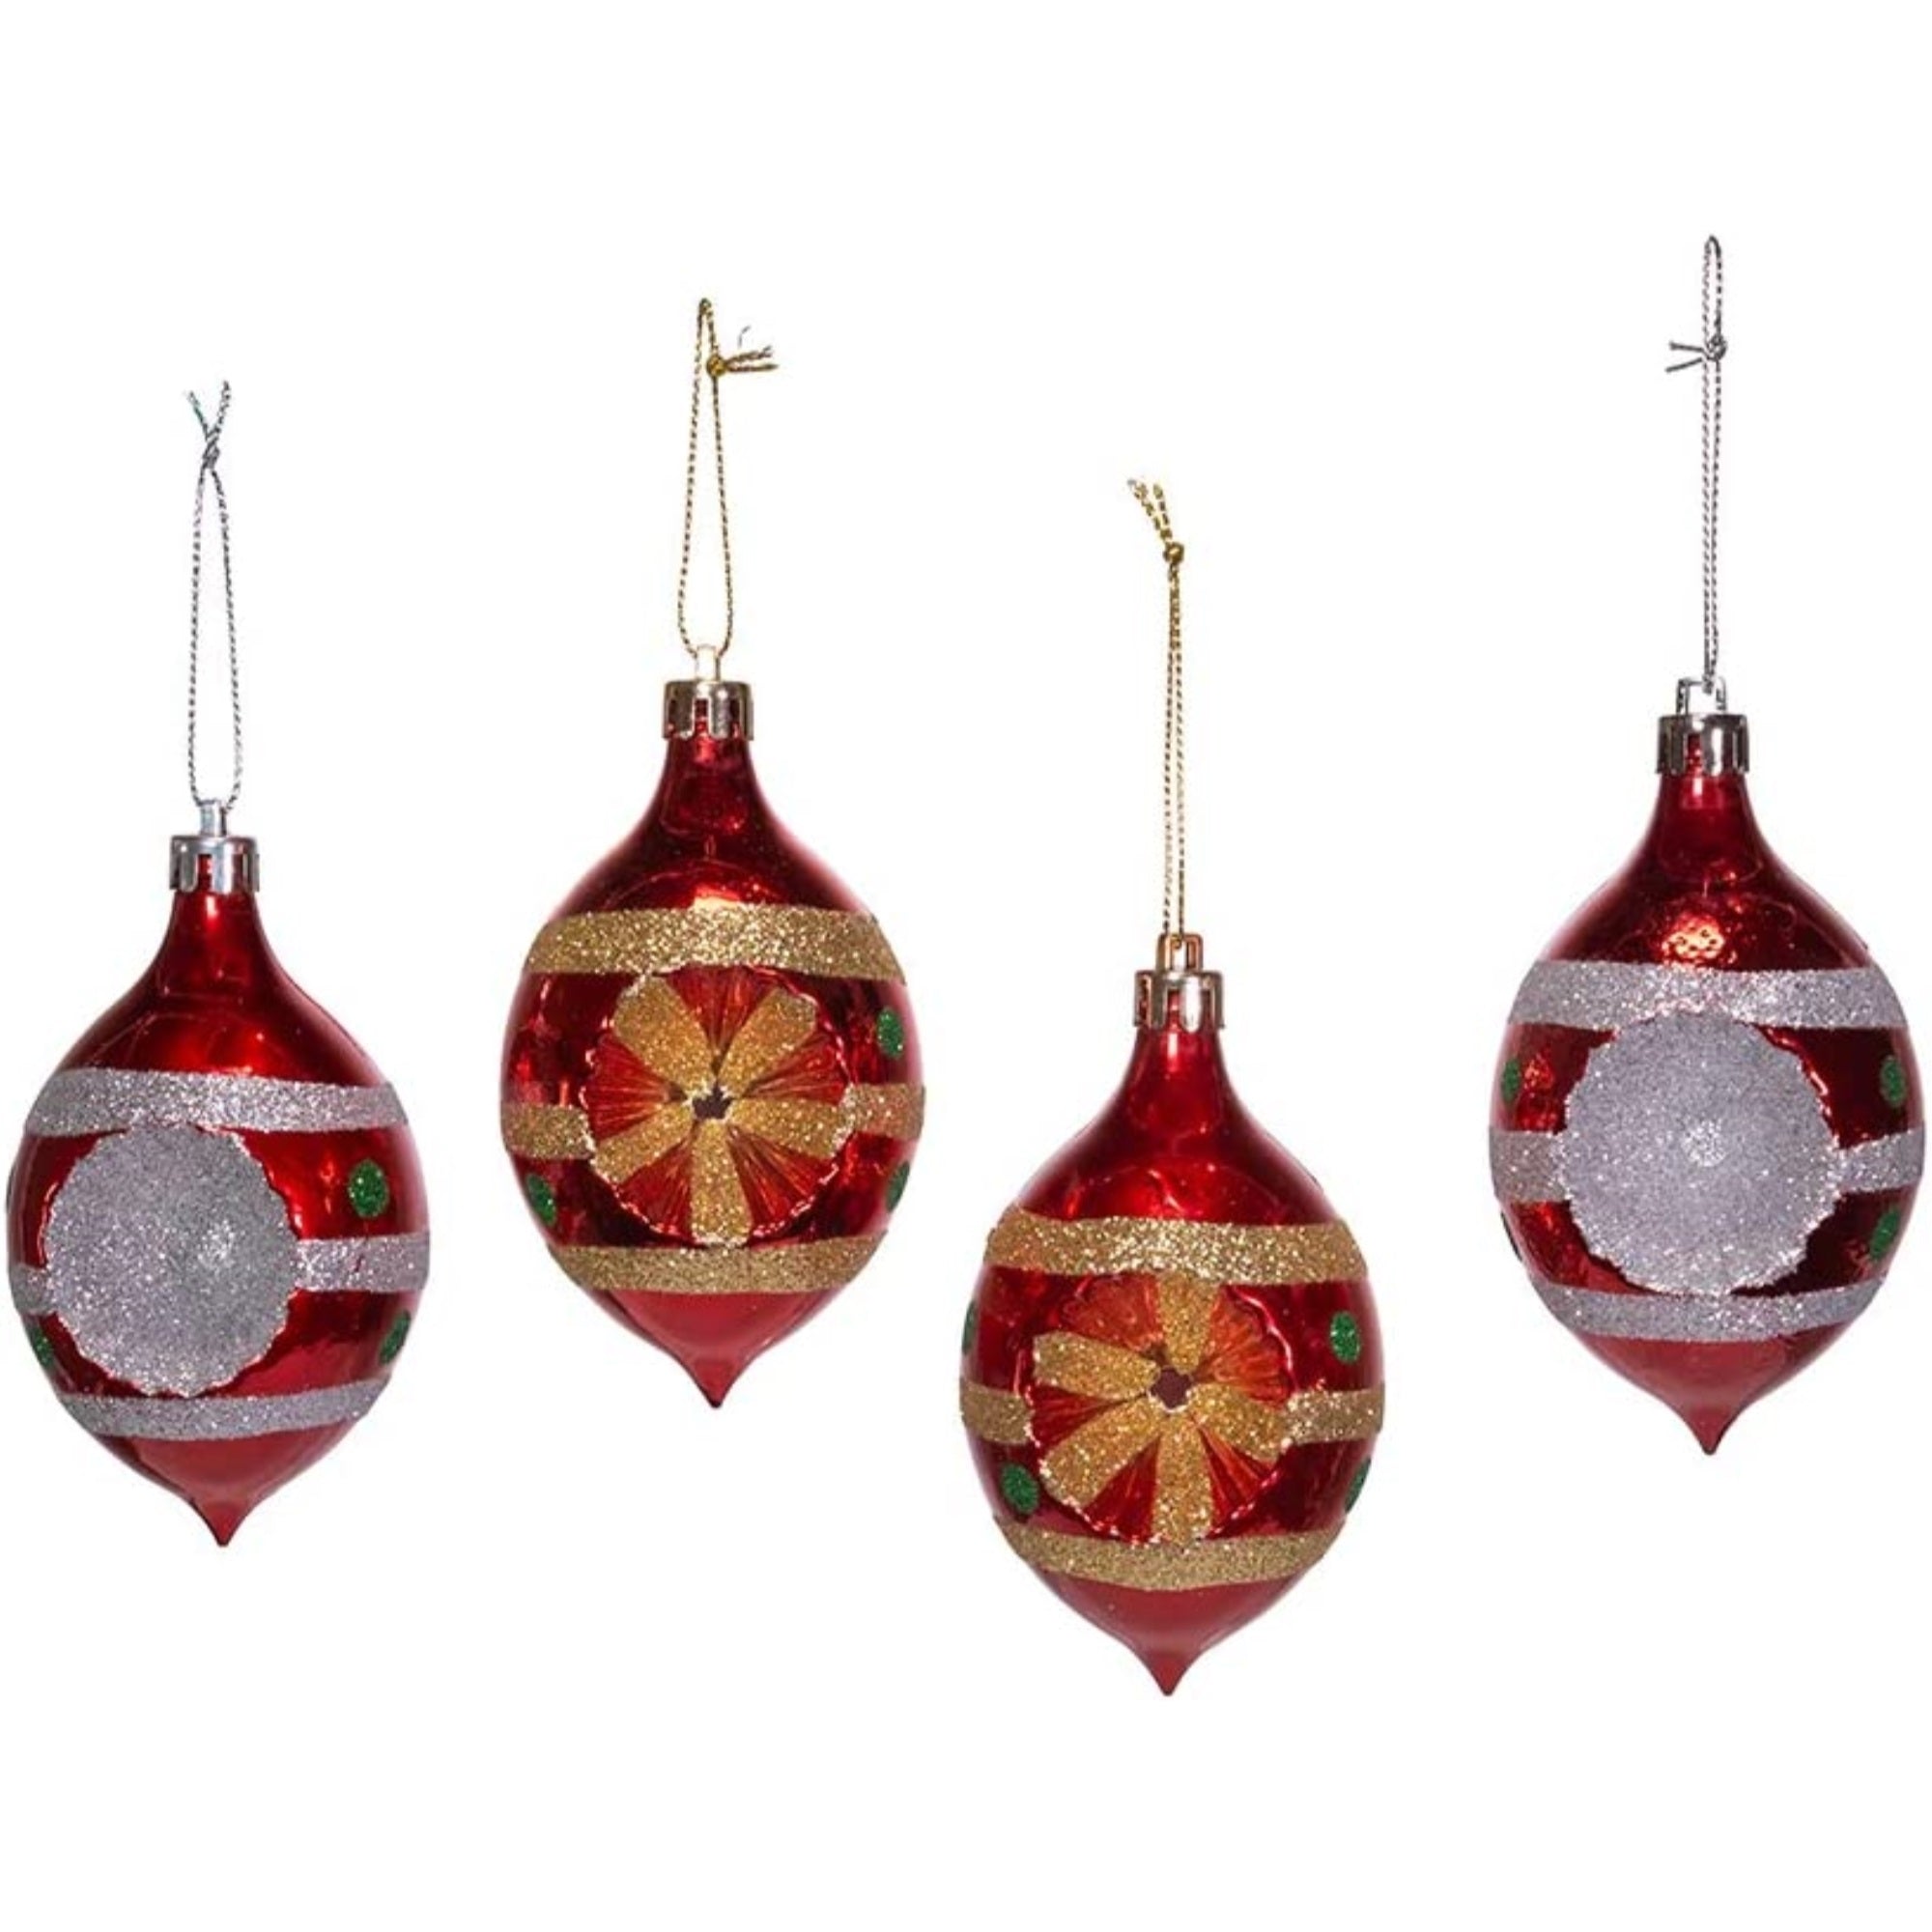 Kurt Adler Christmas Ornament Set 4 Piece, Plastic Set, Multi-Colored, 2.5"